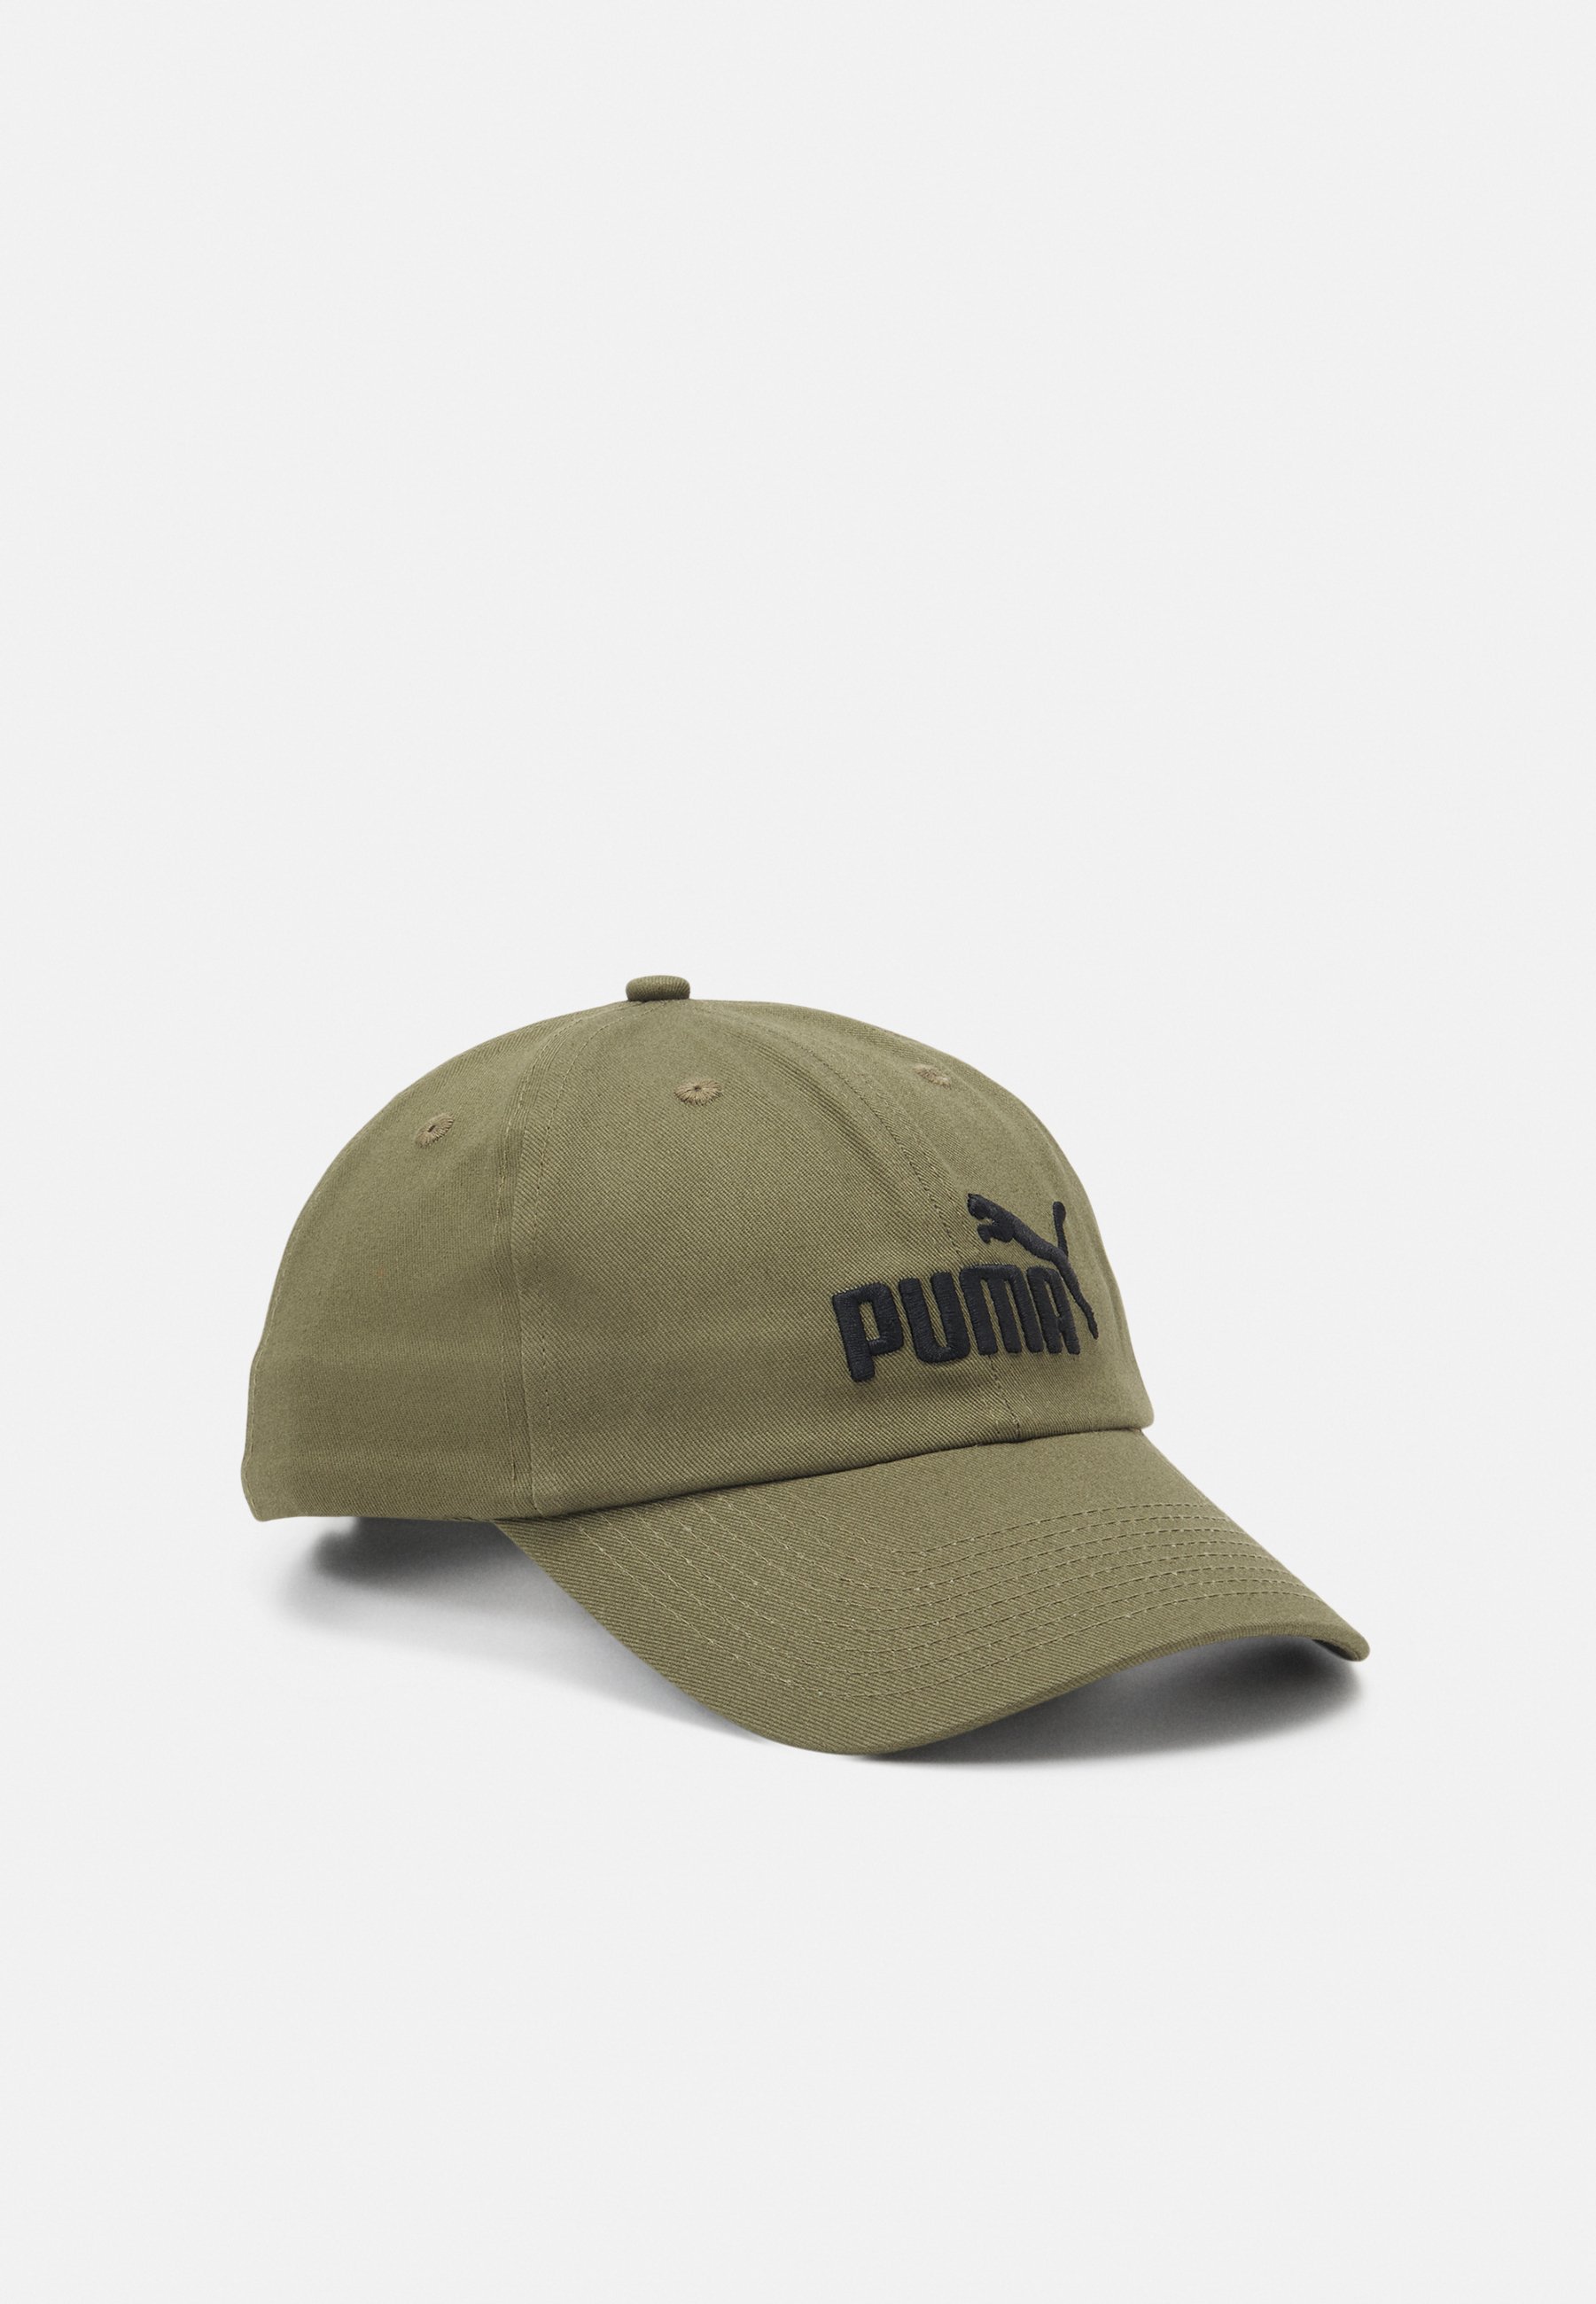 Puma UNISEX - Cap - dark green moss/oliv